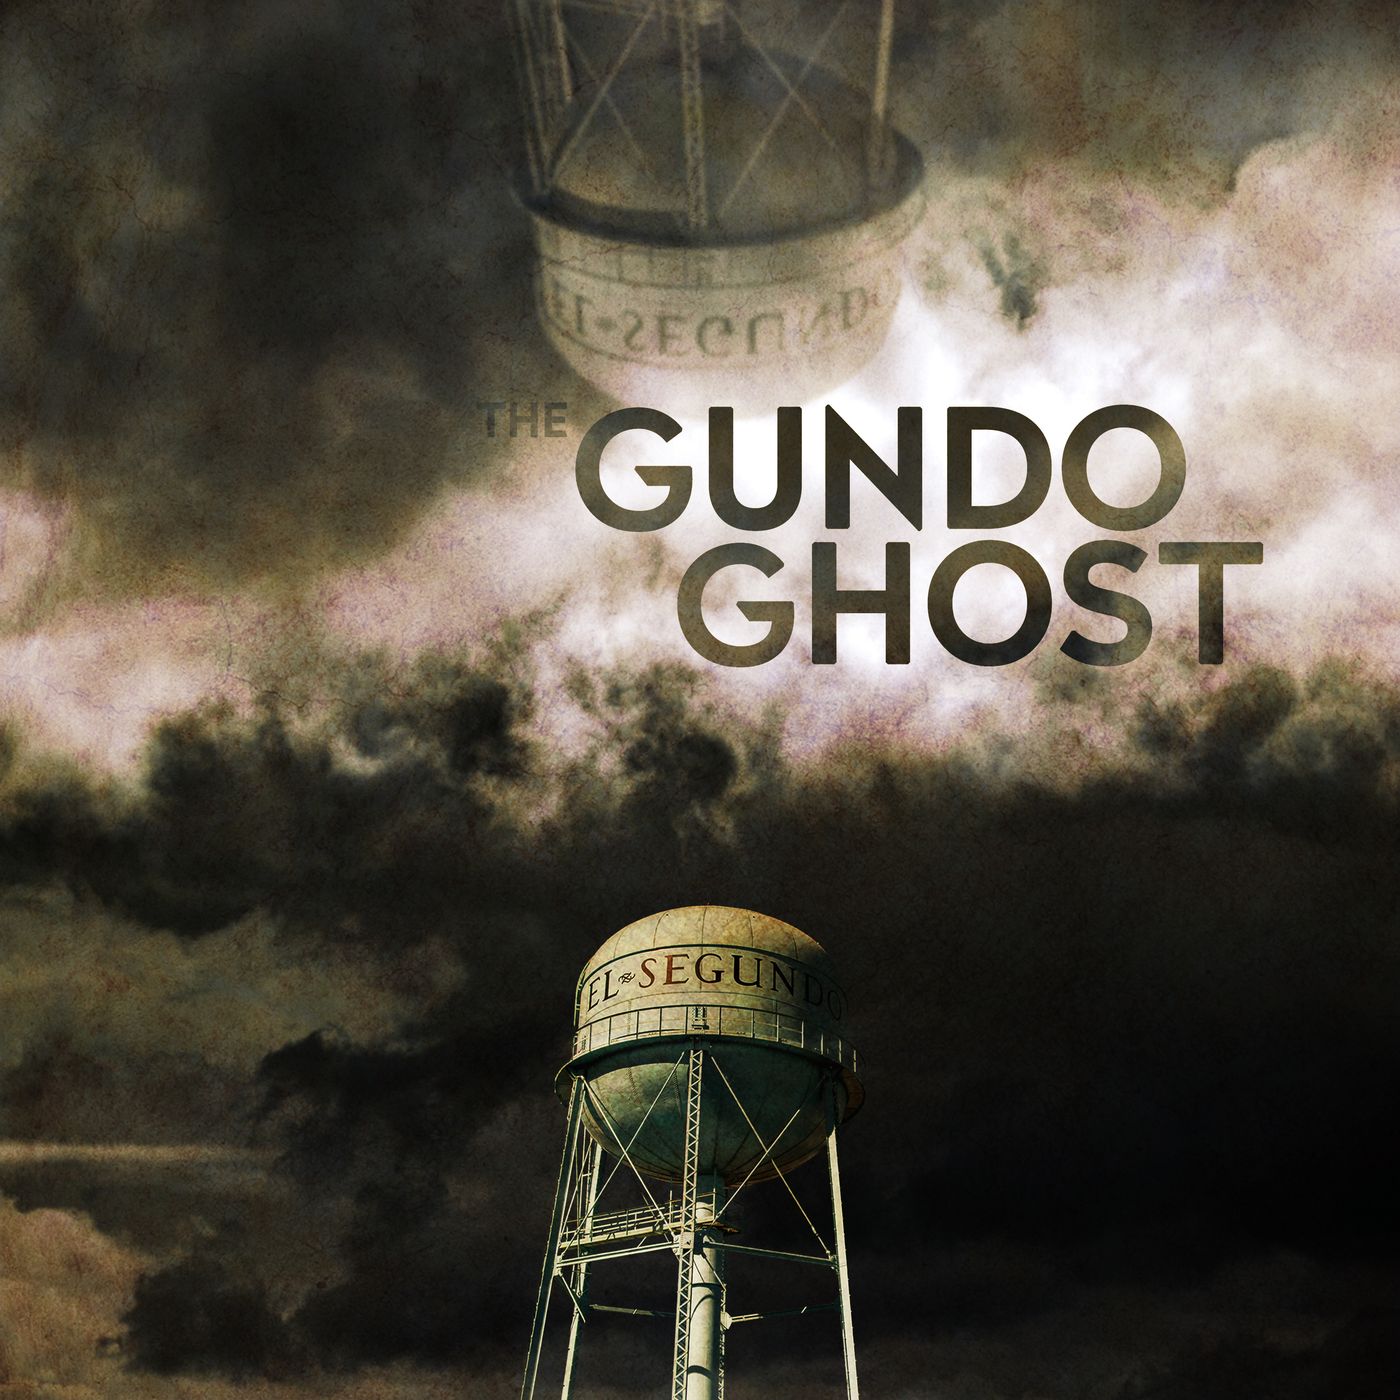 The Gundo Ghost